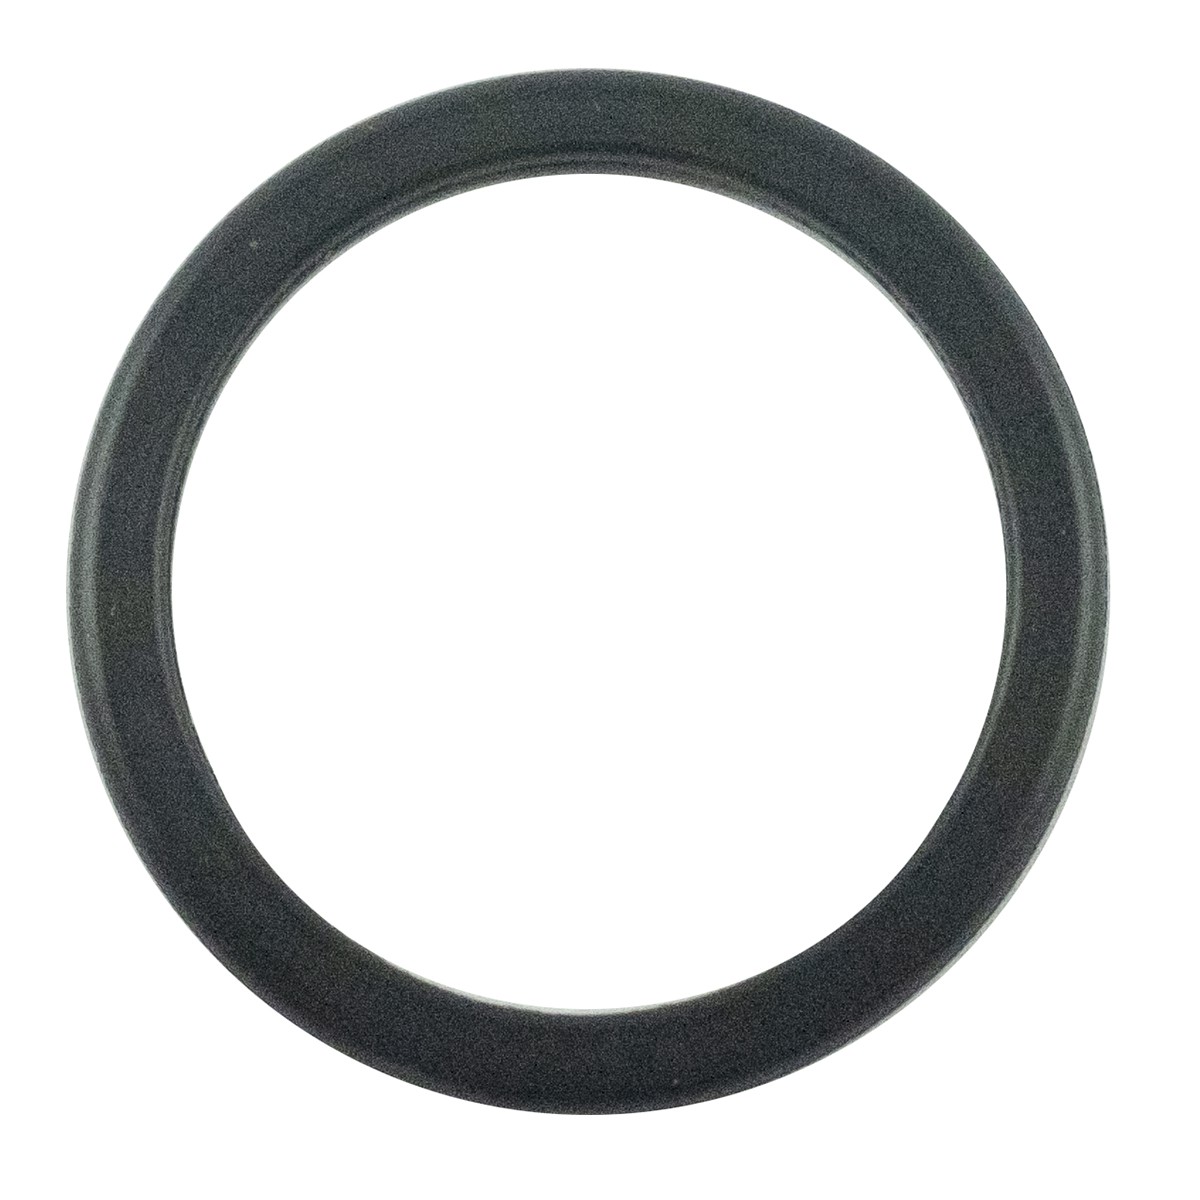 O-ring 23.50 x 2 mm / LS MT1.25 / 158552-61900 / 40356074